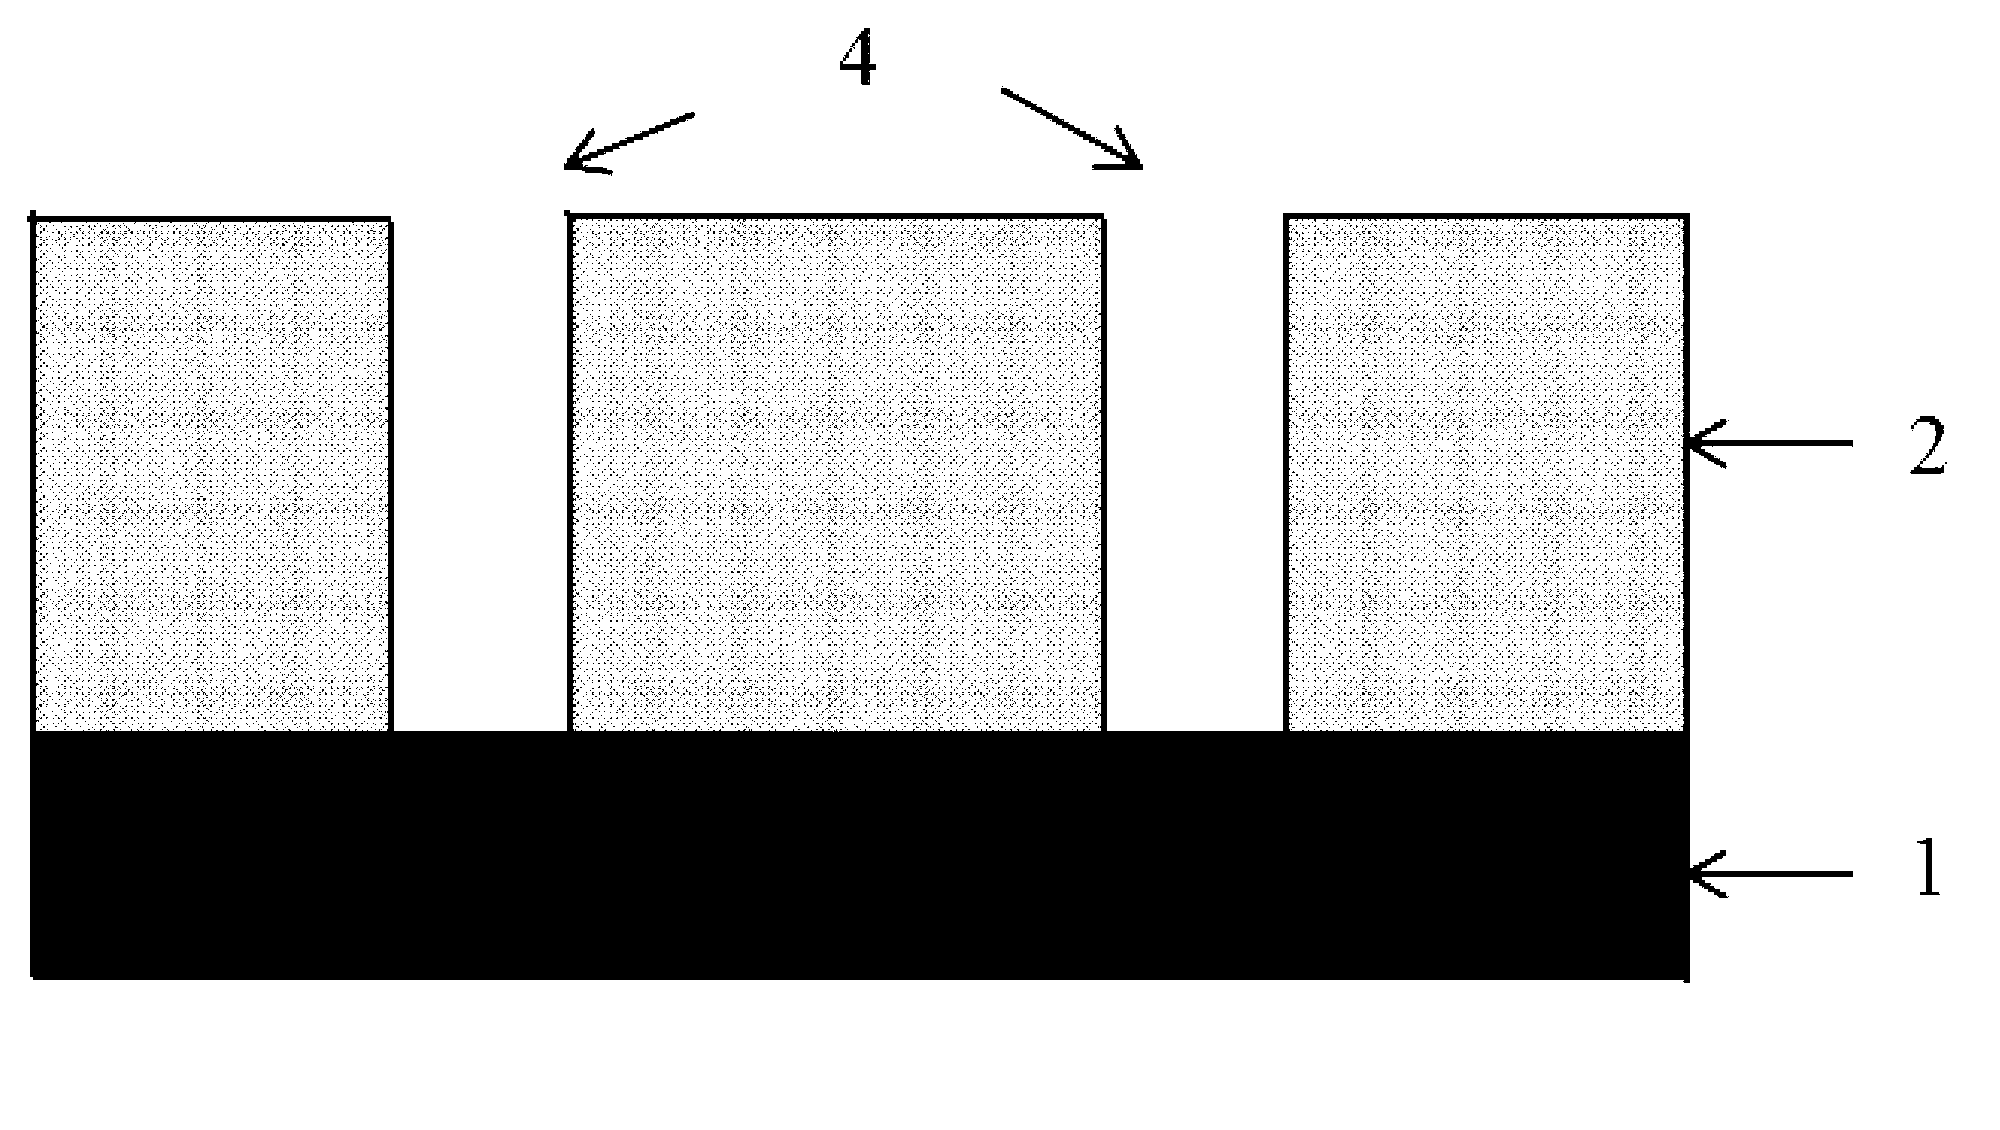 Through-hole-priority dual damascene copper interconnection method for reducing coupling capacitance of redundant metal